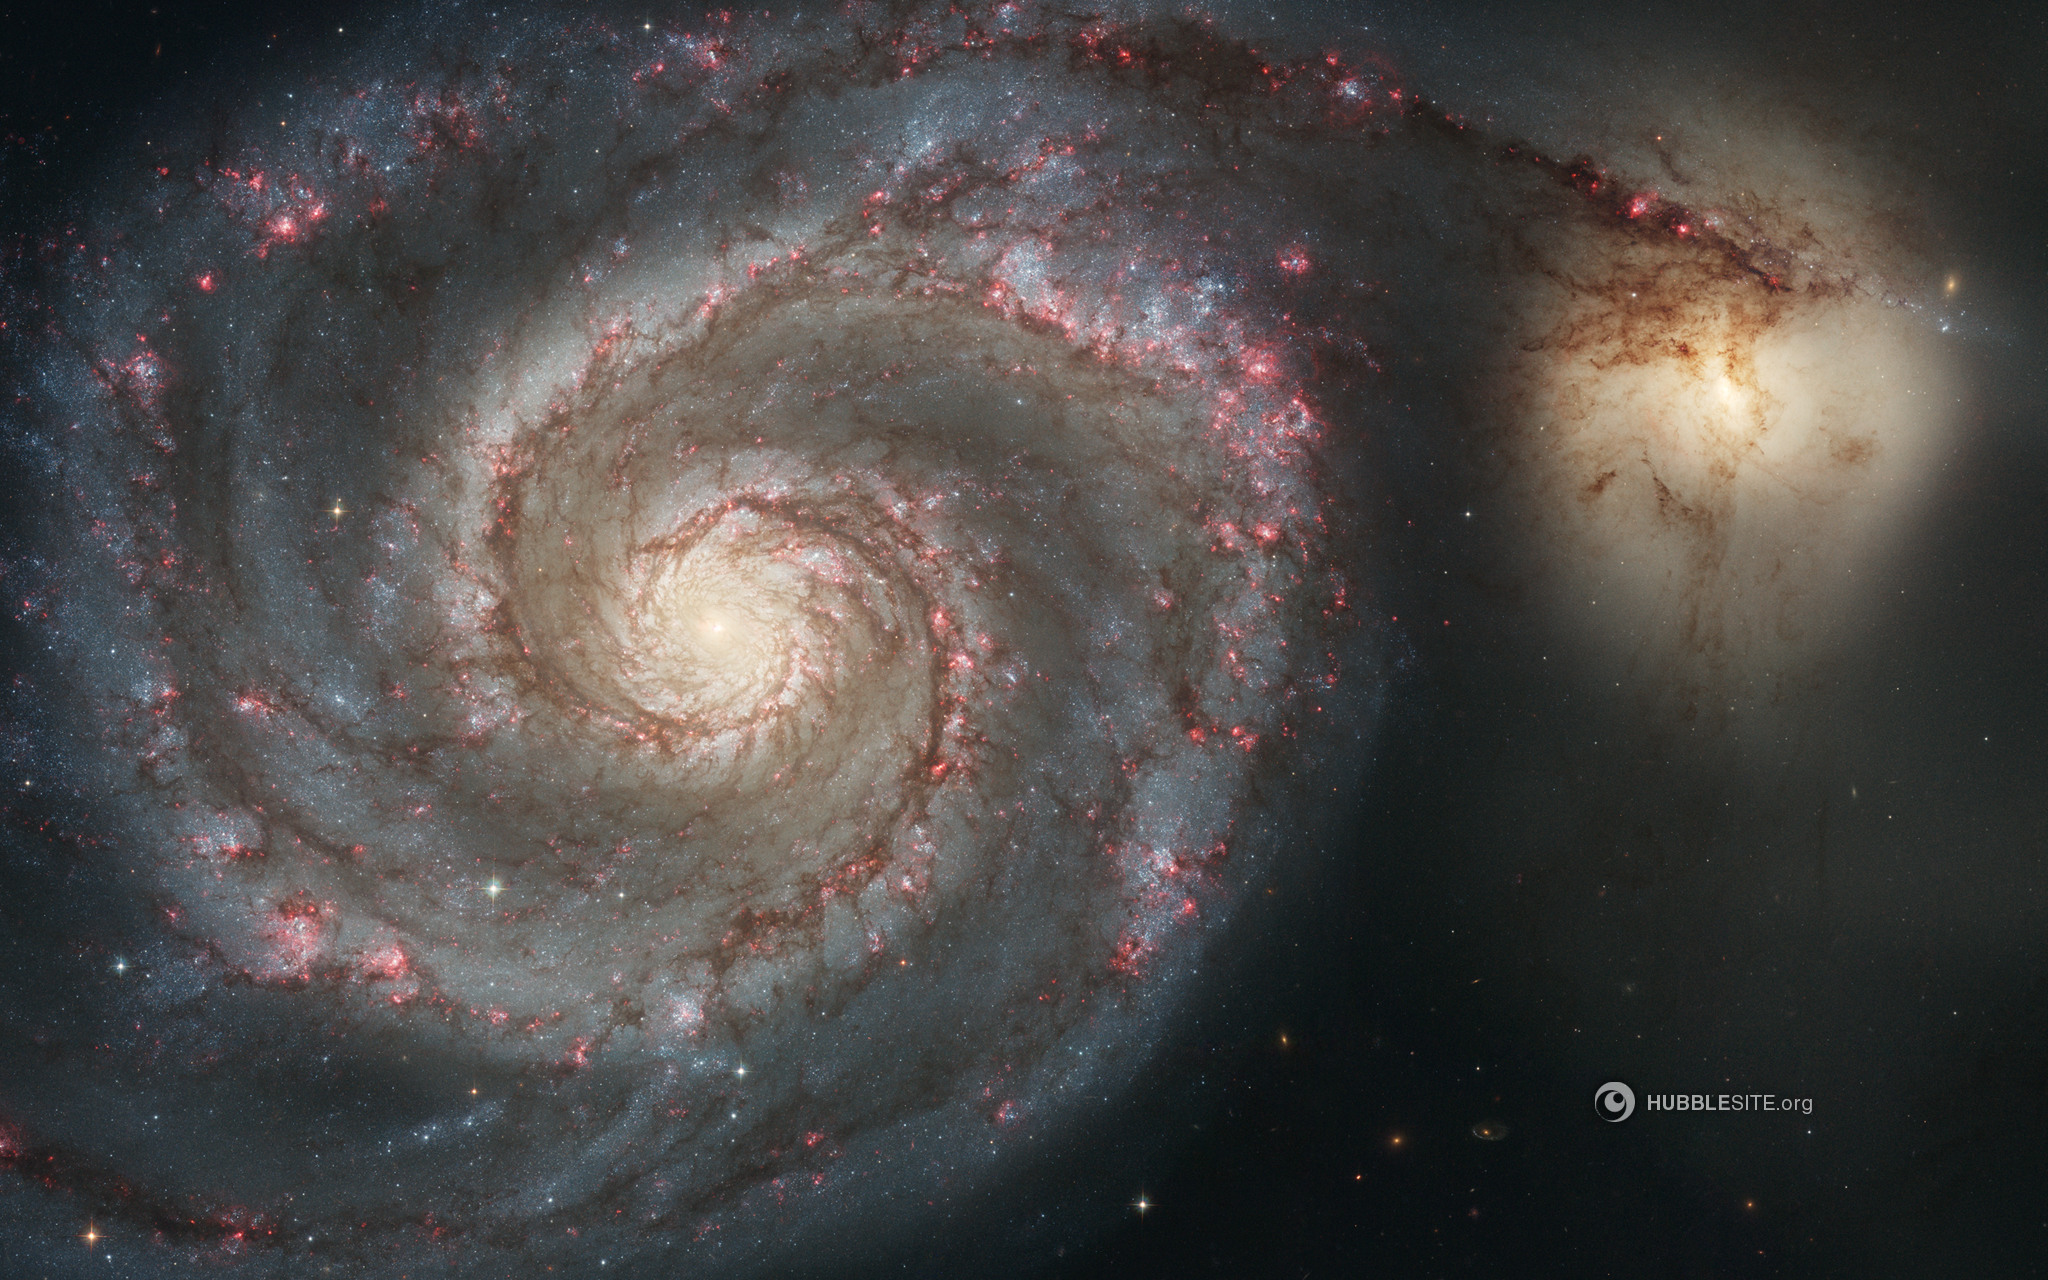 The Whirlpool Galaxy and Companion Galaxy